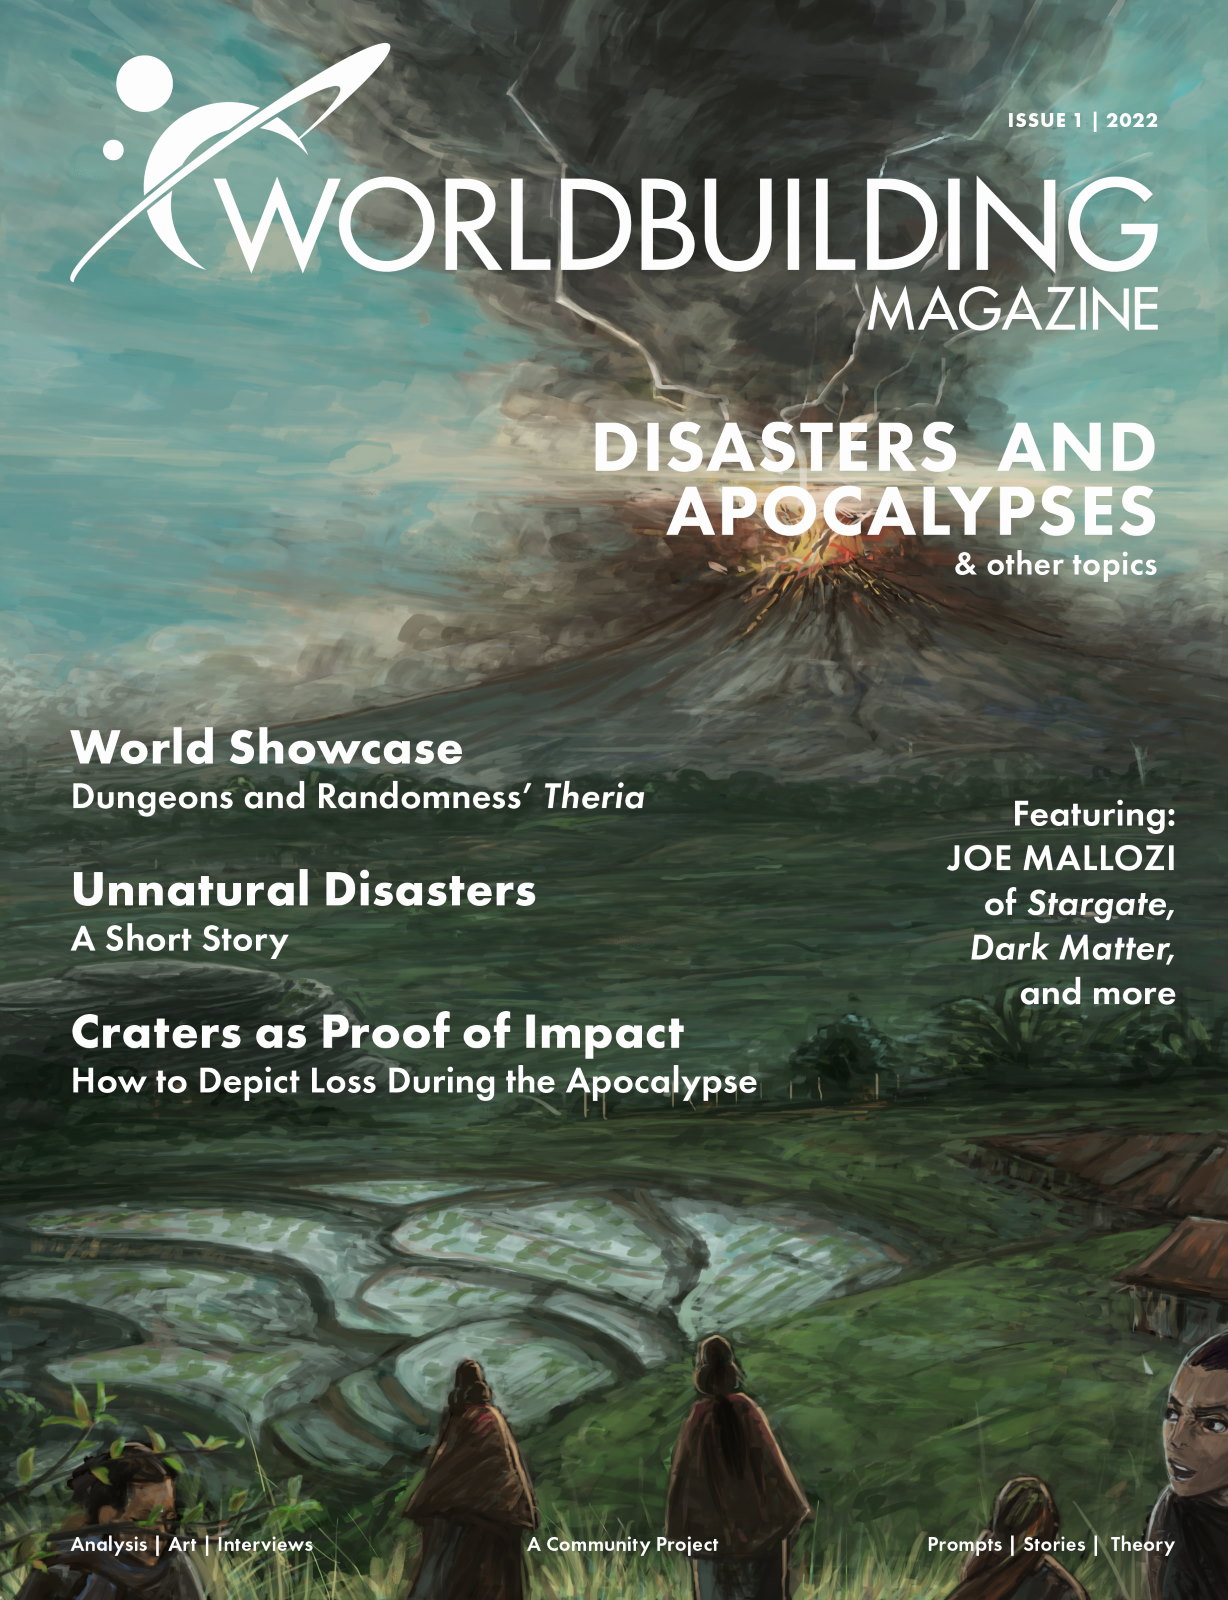 Worldbuilding Magazine Volume 6 Issue 1 - Disasters and Apocalypses